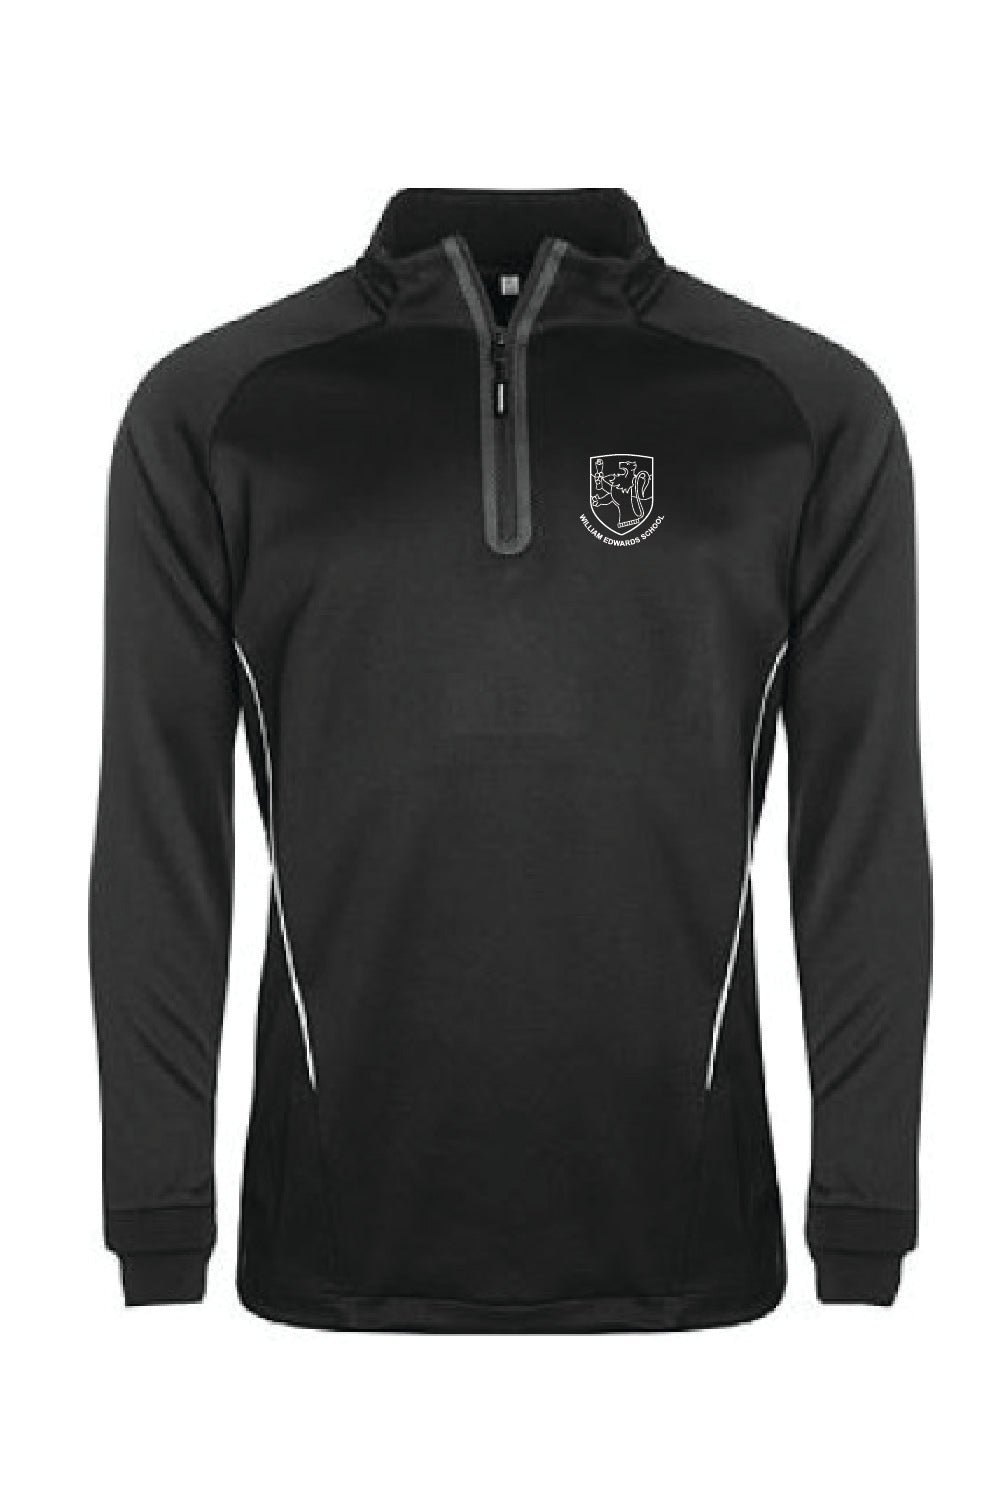 William Edwards School PE Track Top-personalised - Uniformwise Schoolwear